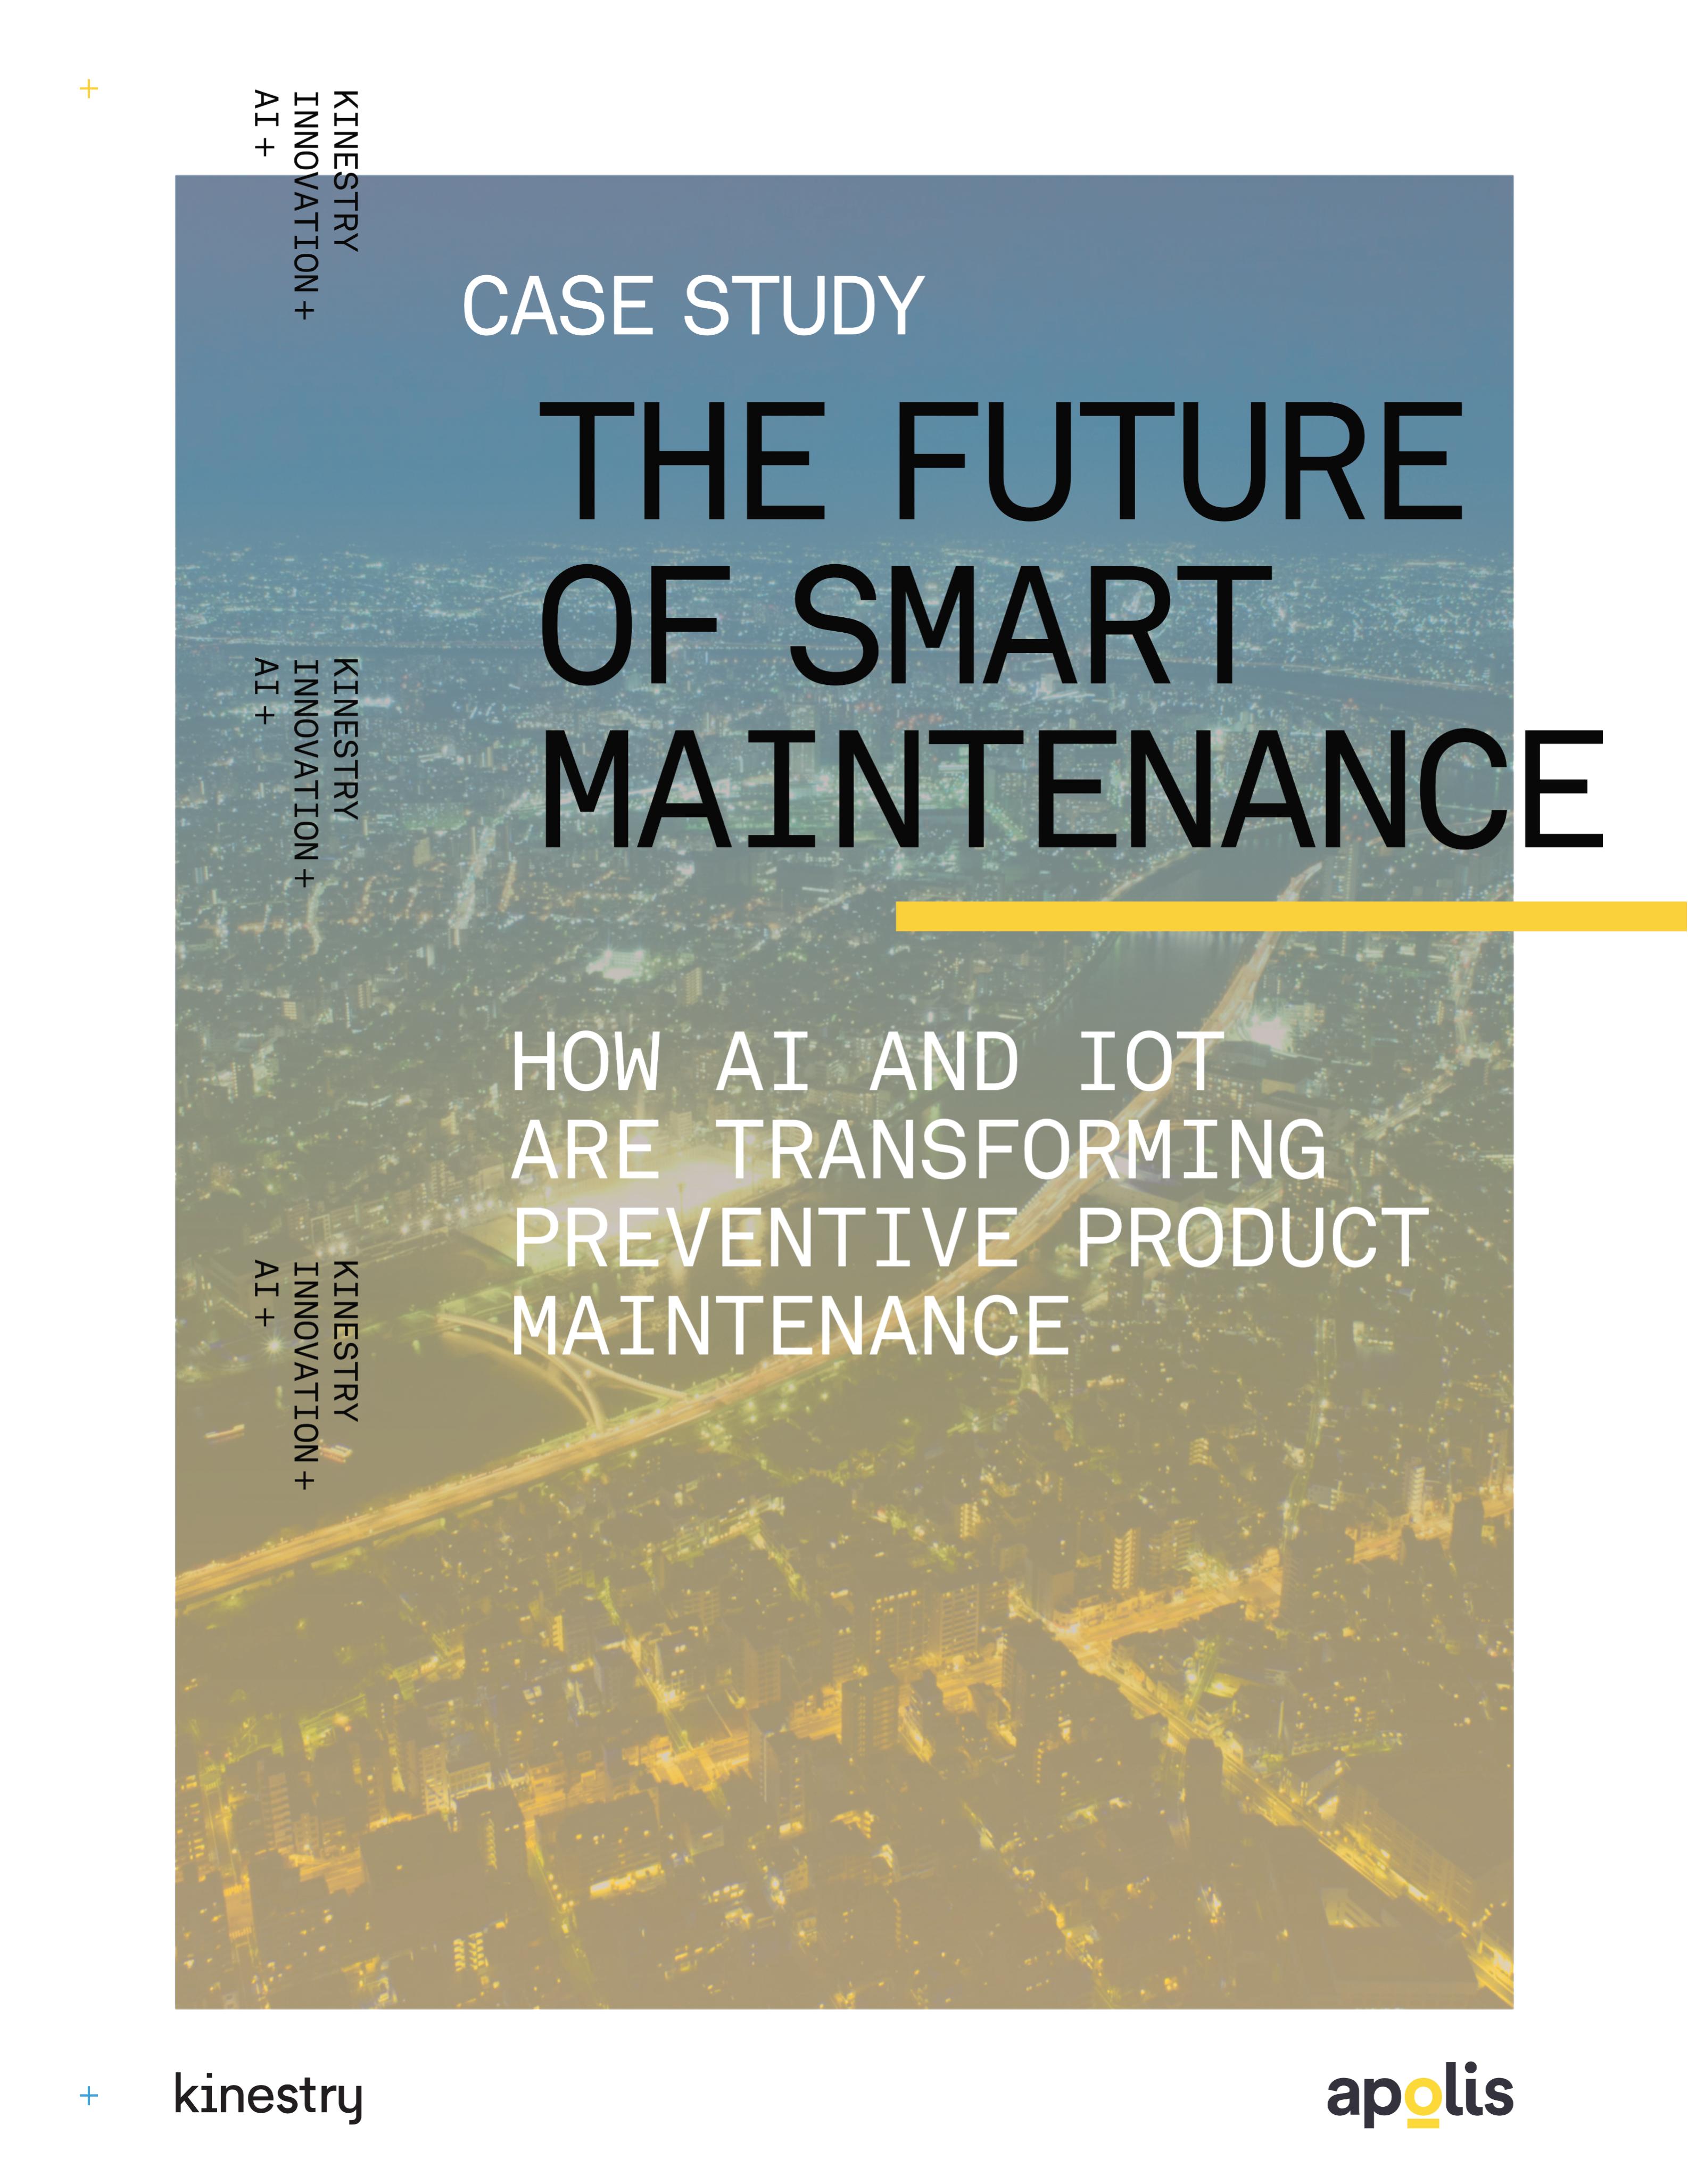 The Future of Smart Maintenance